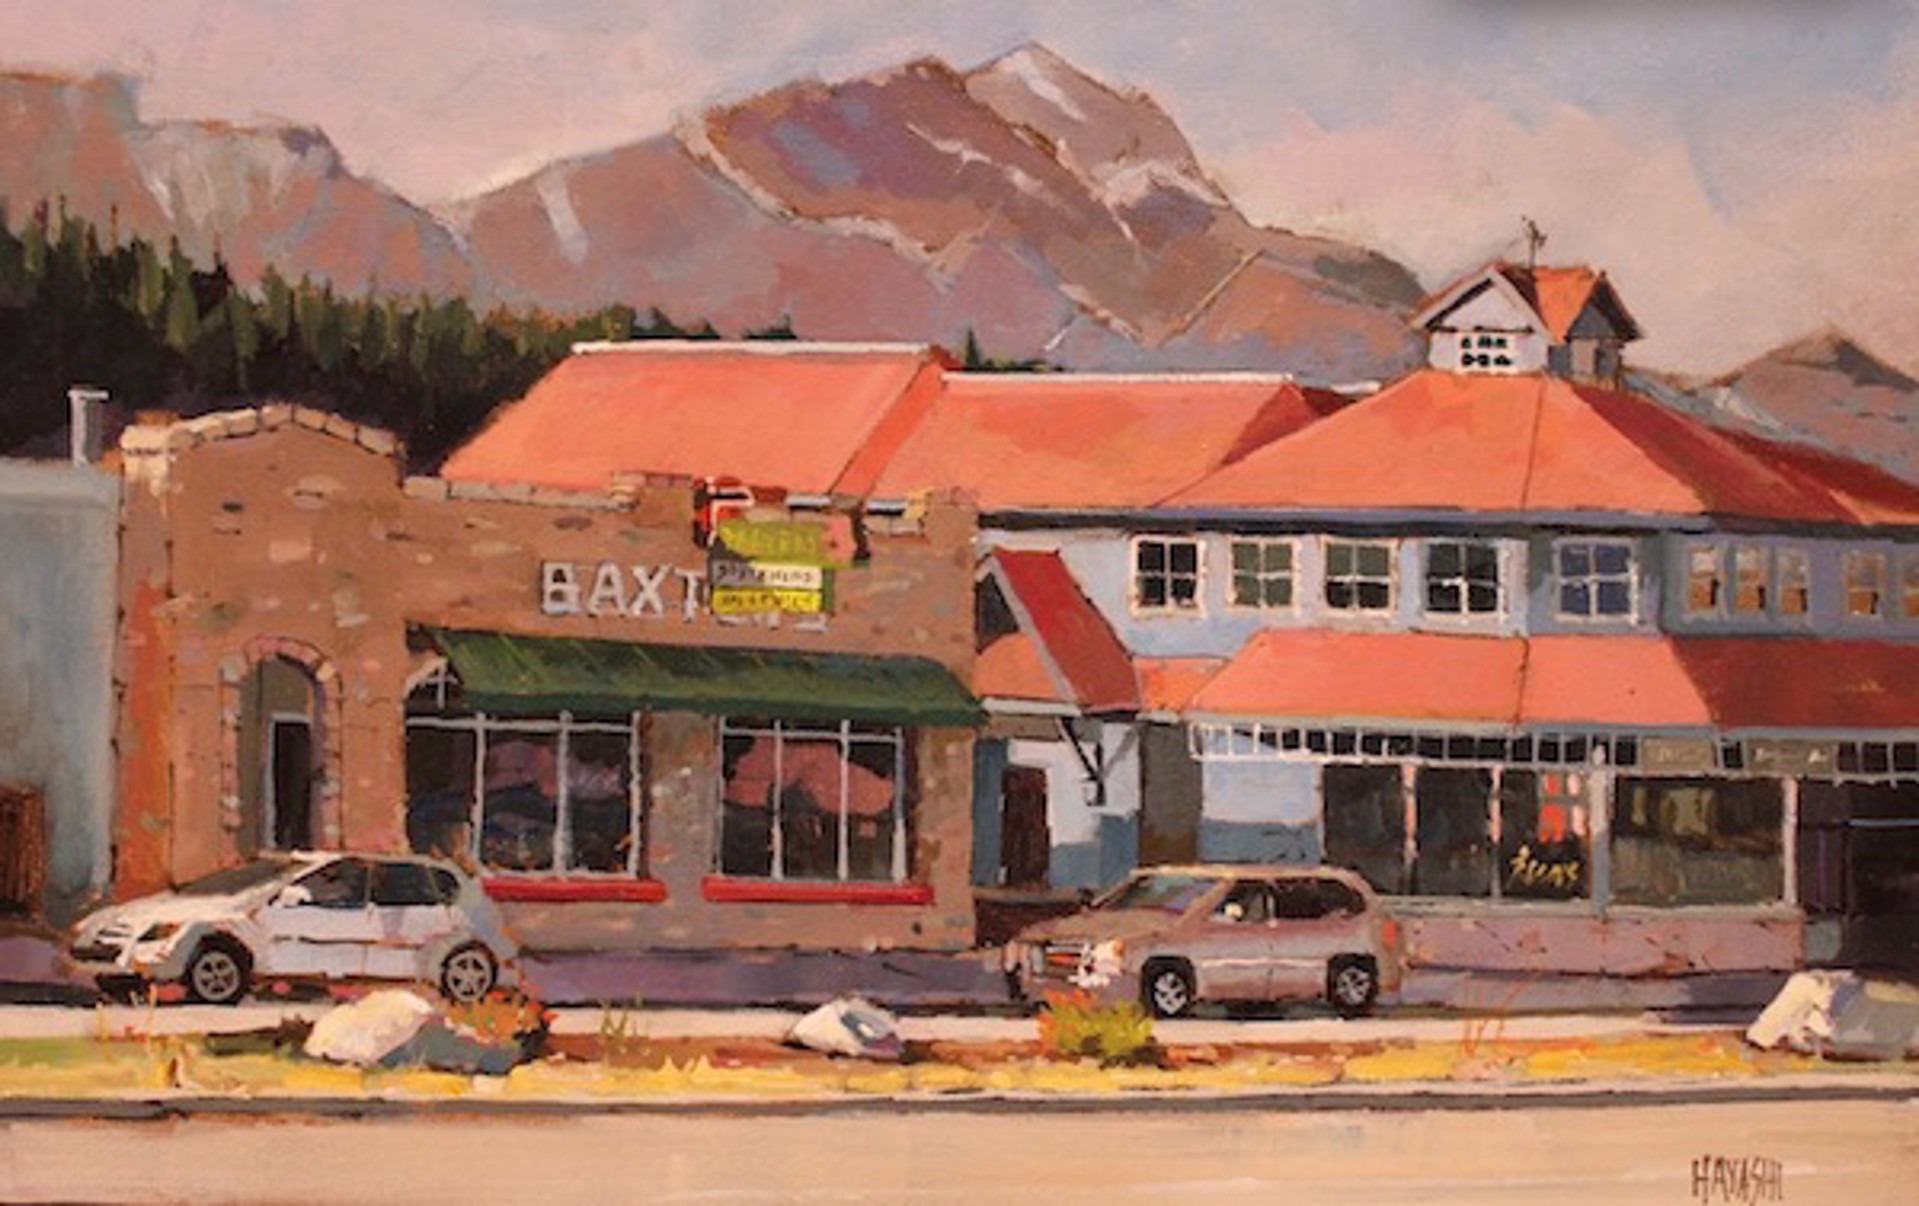 Baxters by Randy Hayashi